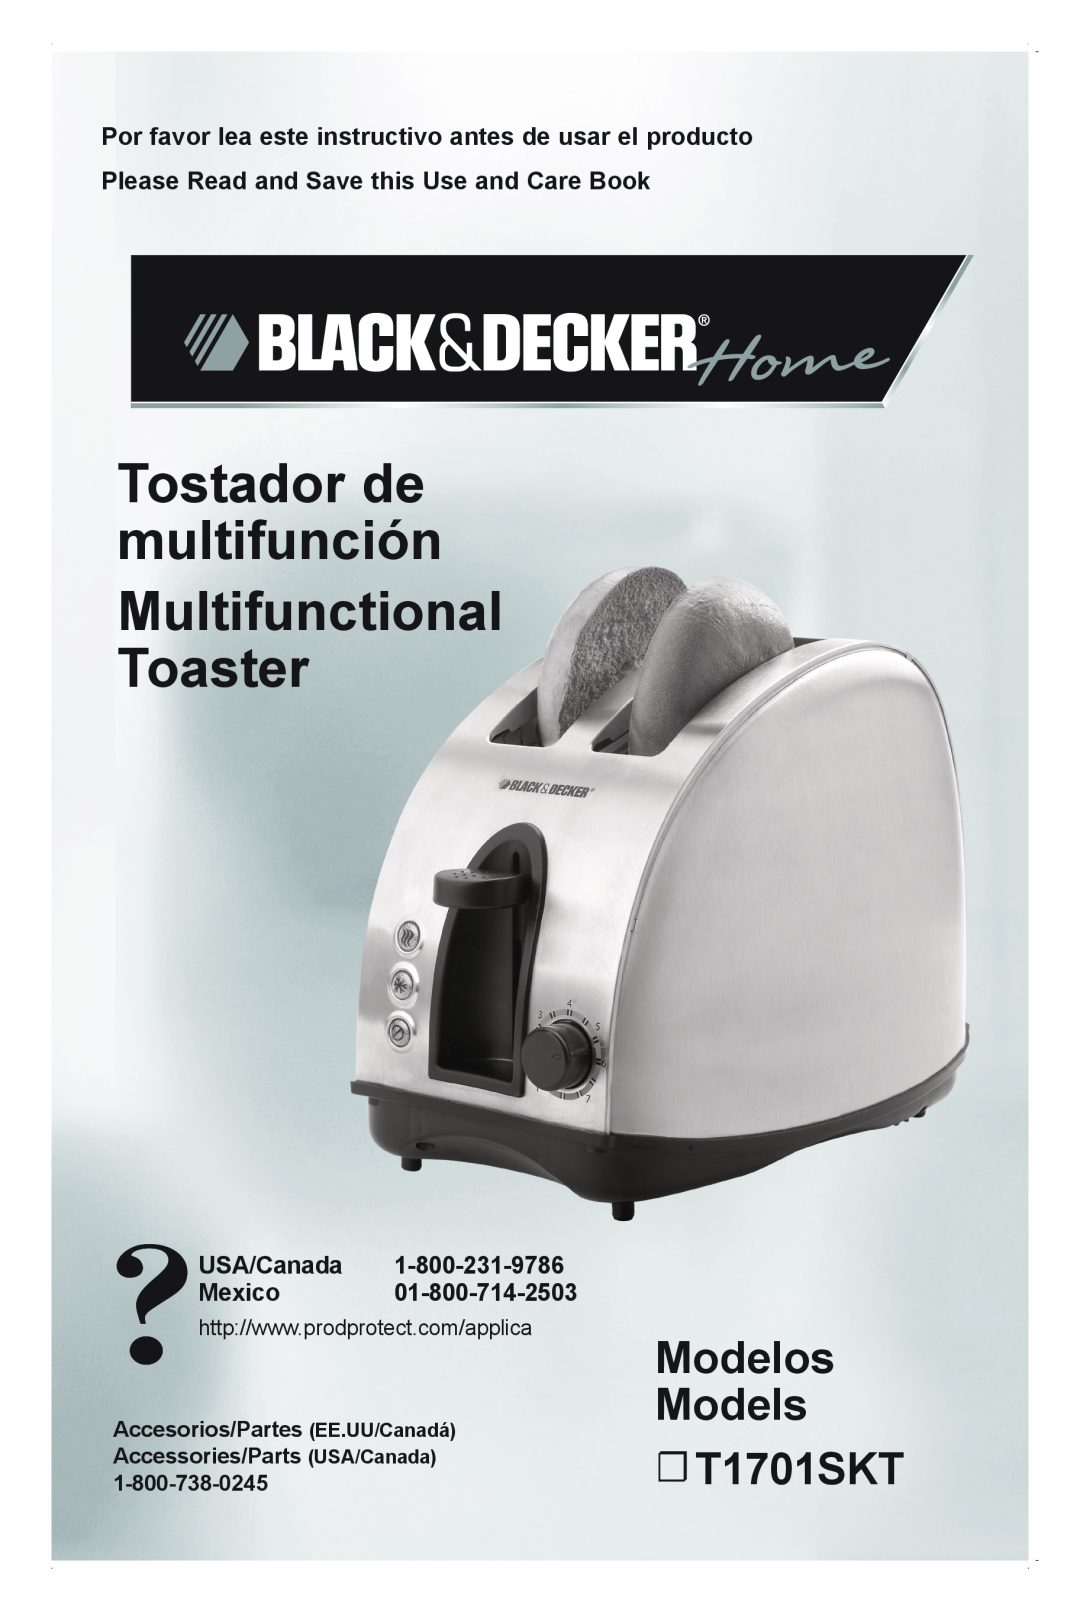 Black & Decker manual Tostador de multifunción Multifunctional Toaster, Modelos Models T1701SKT, USA/Canada Mexico 